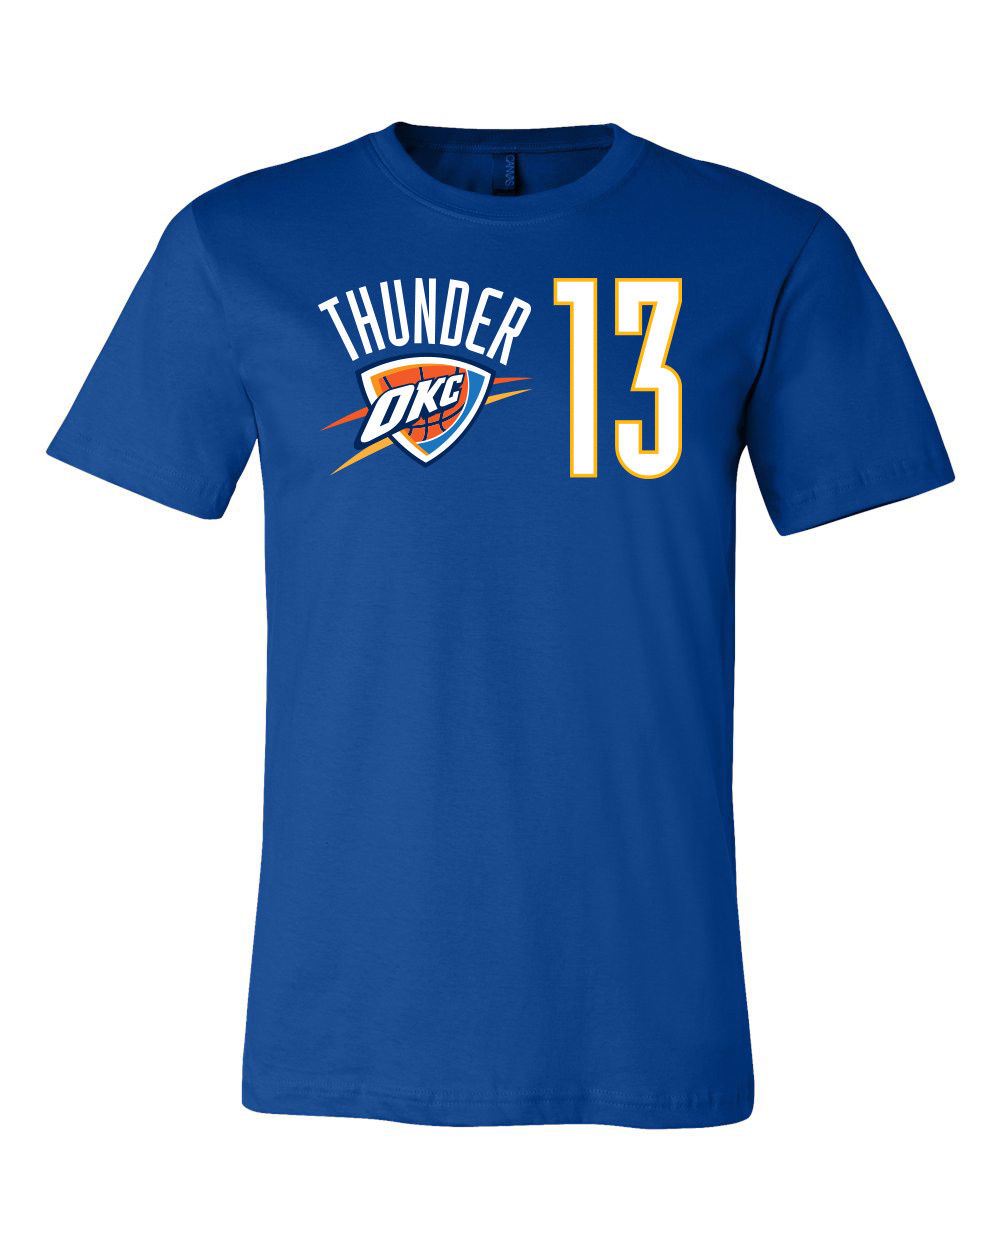 Nike Men's Paul George Black Oklahoma City Thunder Player Performance T- Shirt - ShopStyle